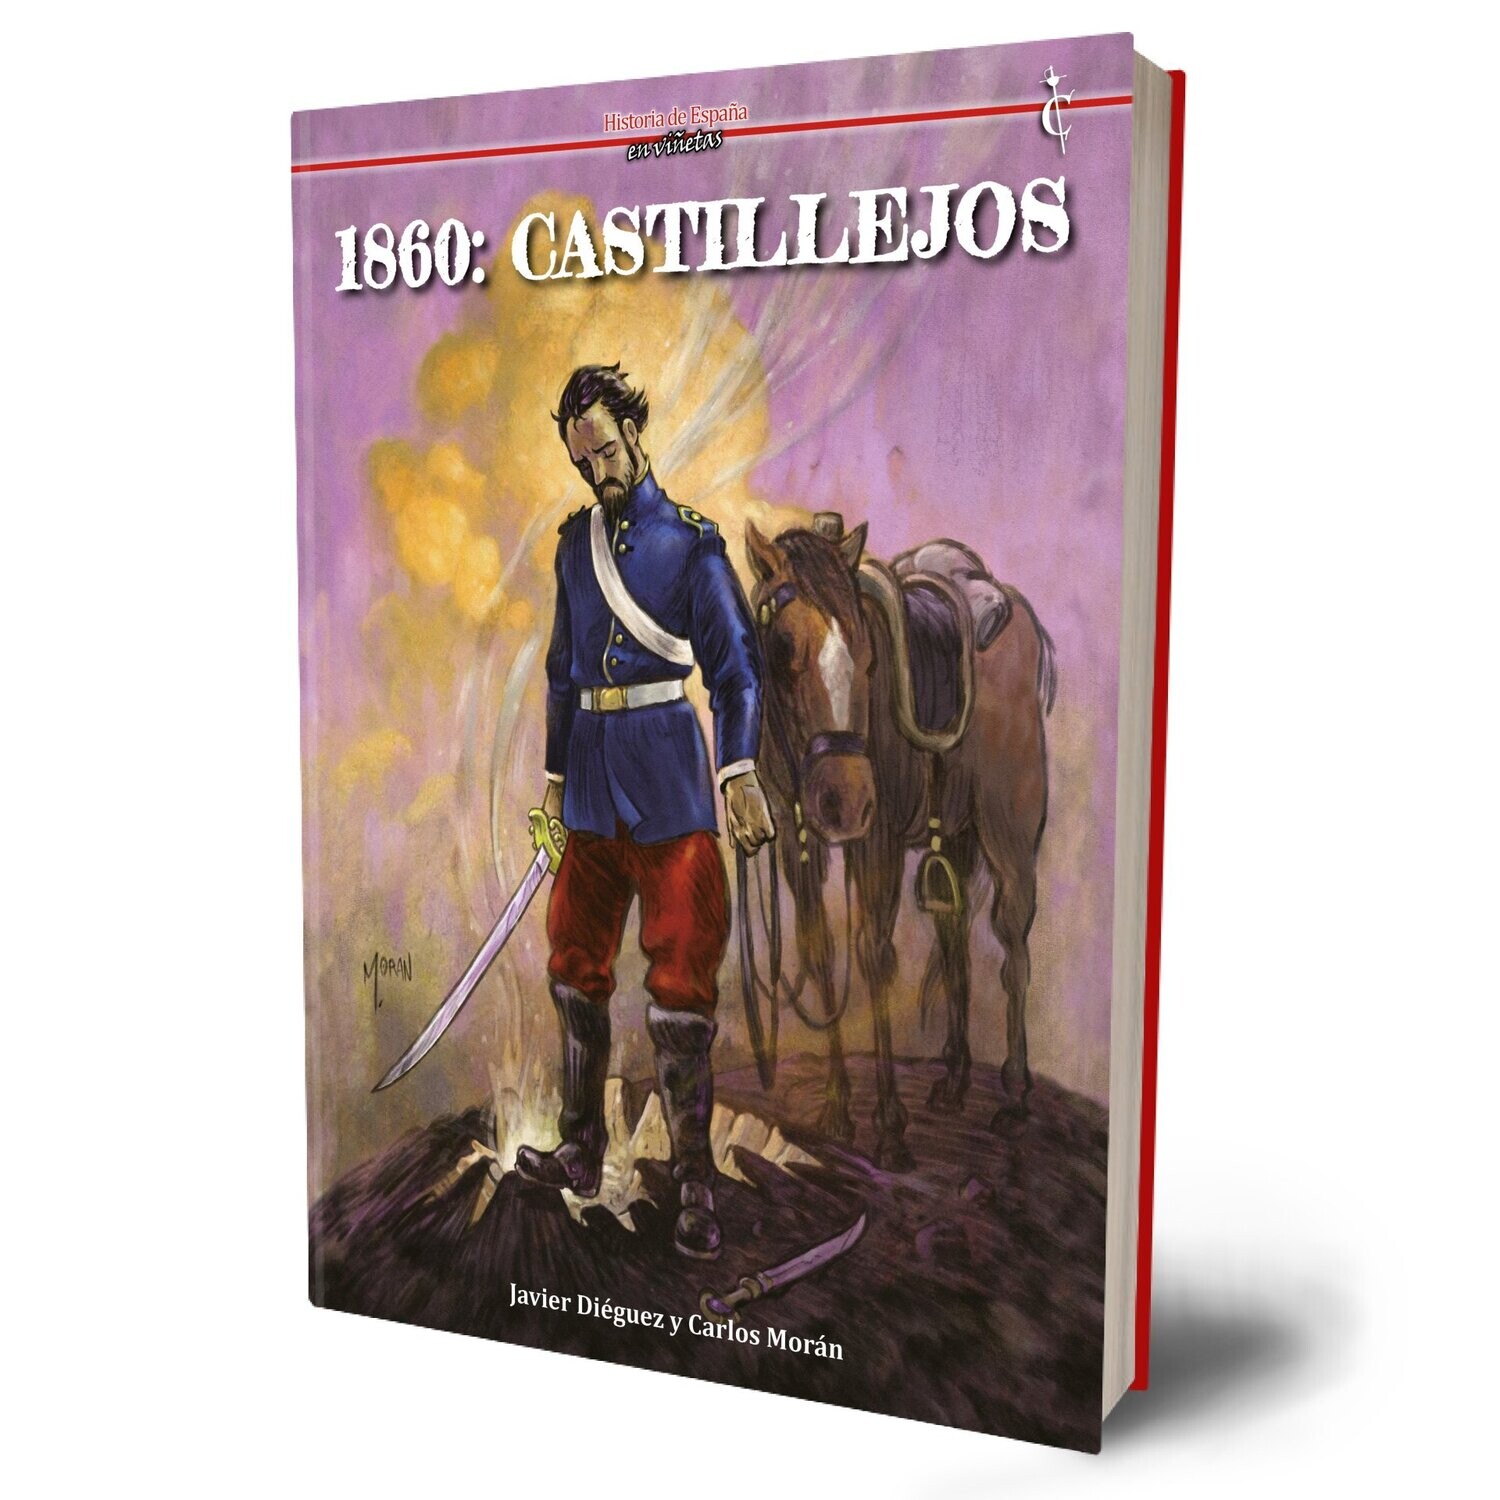 1860: Castillejos